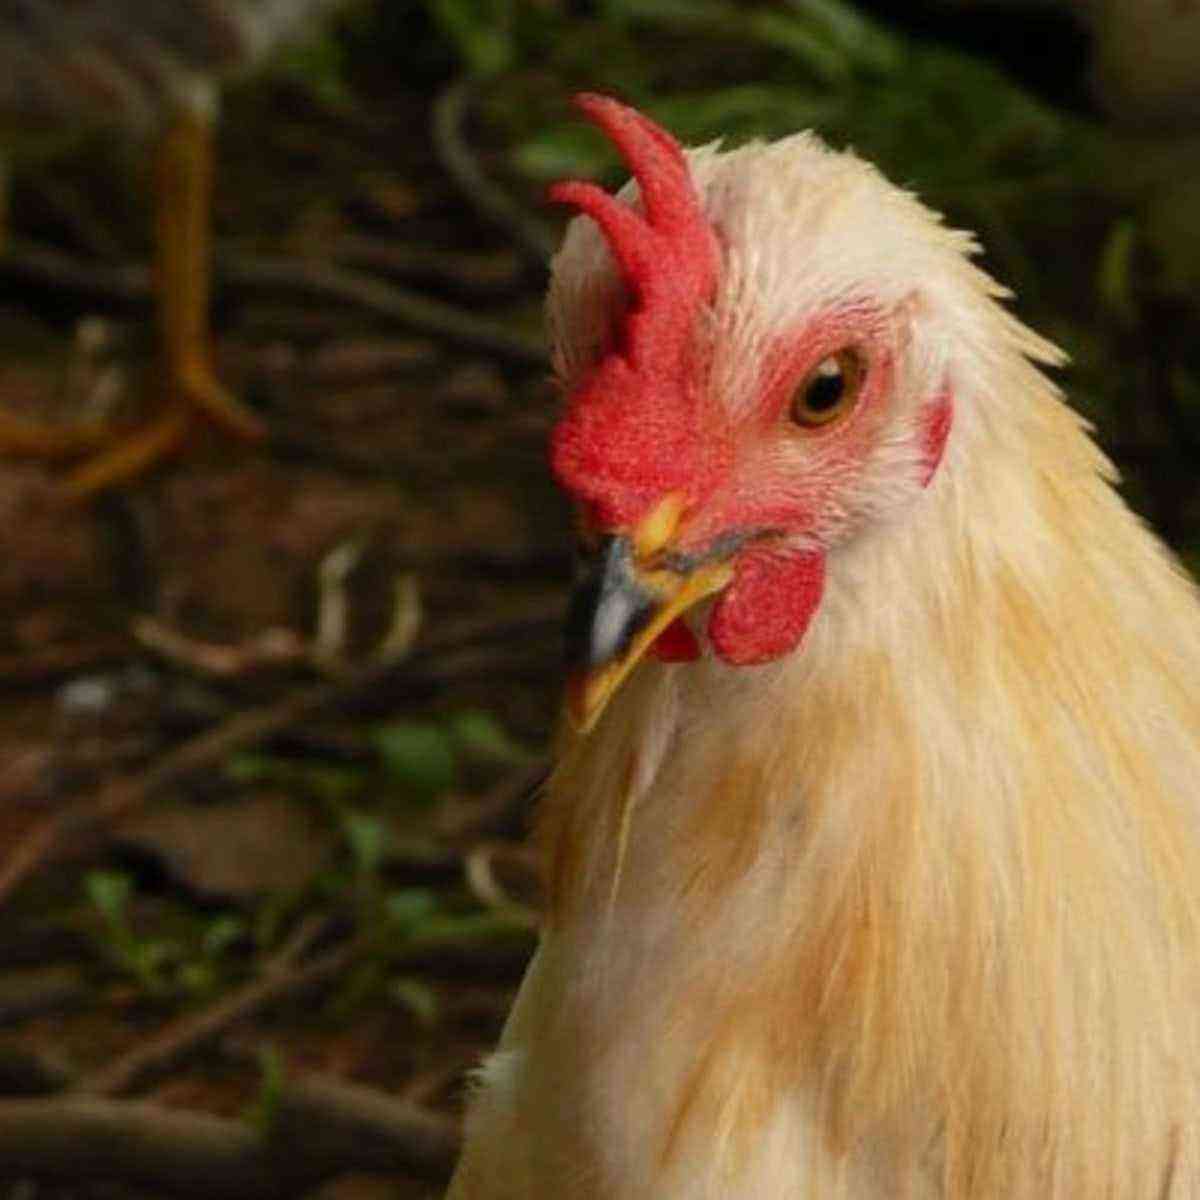 Kippen: Streptococcose bij kippen